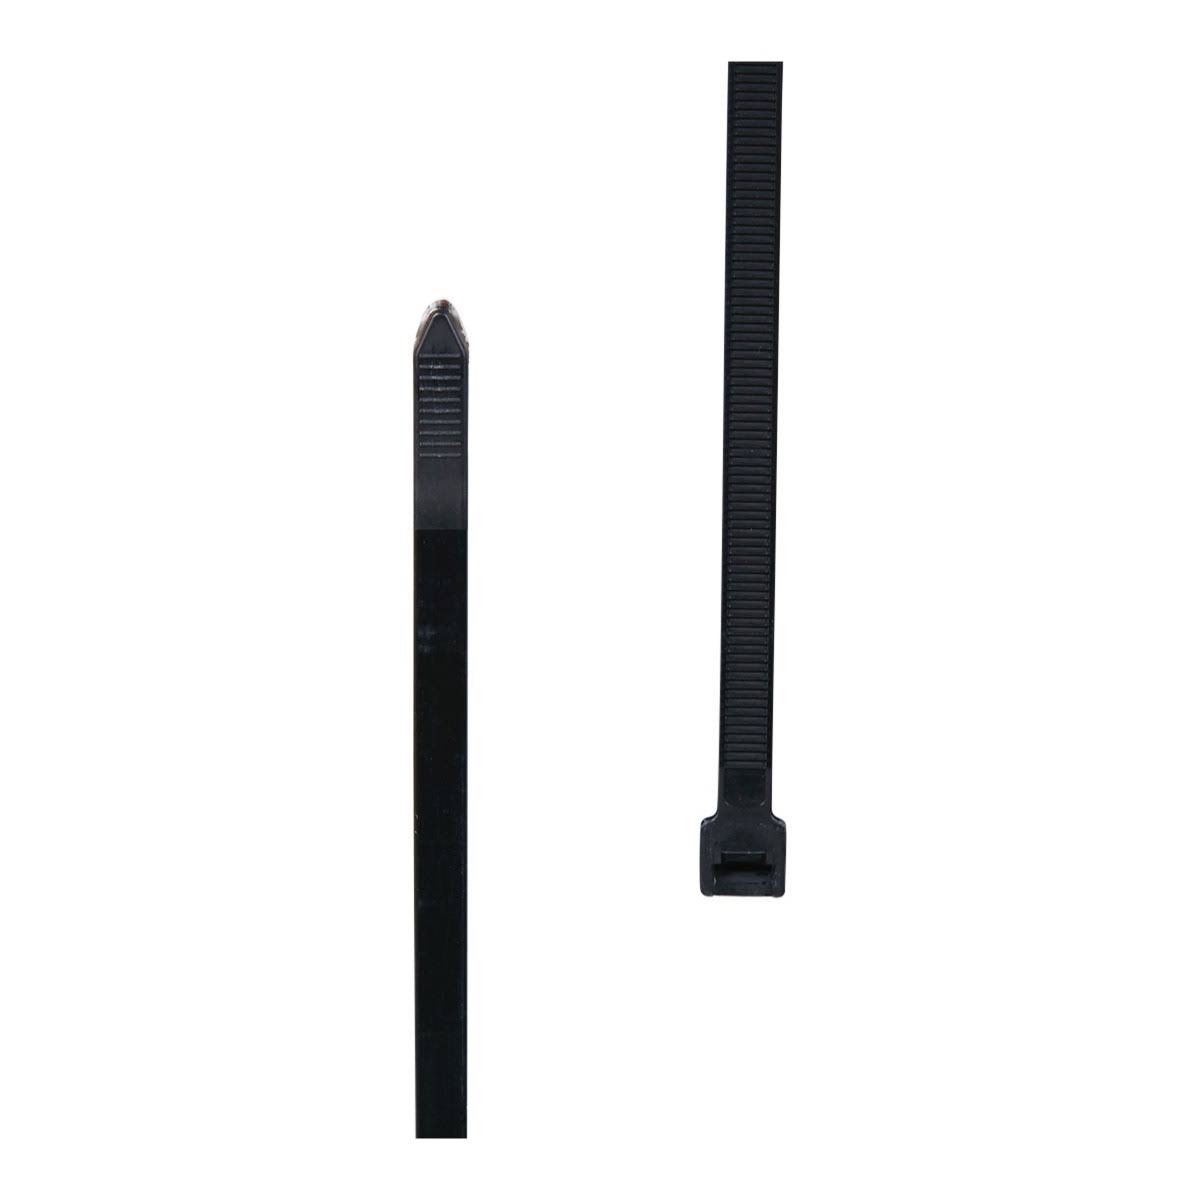 Tool City 14155 Cable Tie - Black, 14.5", 100pk